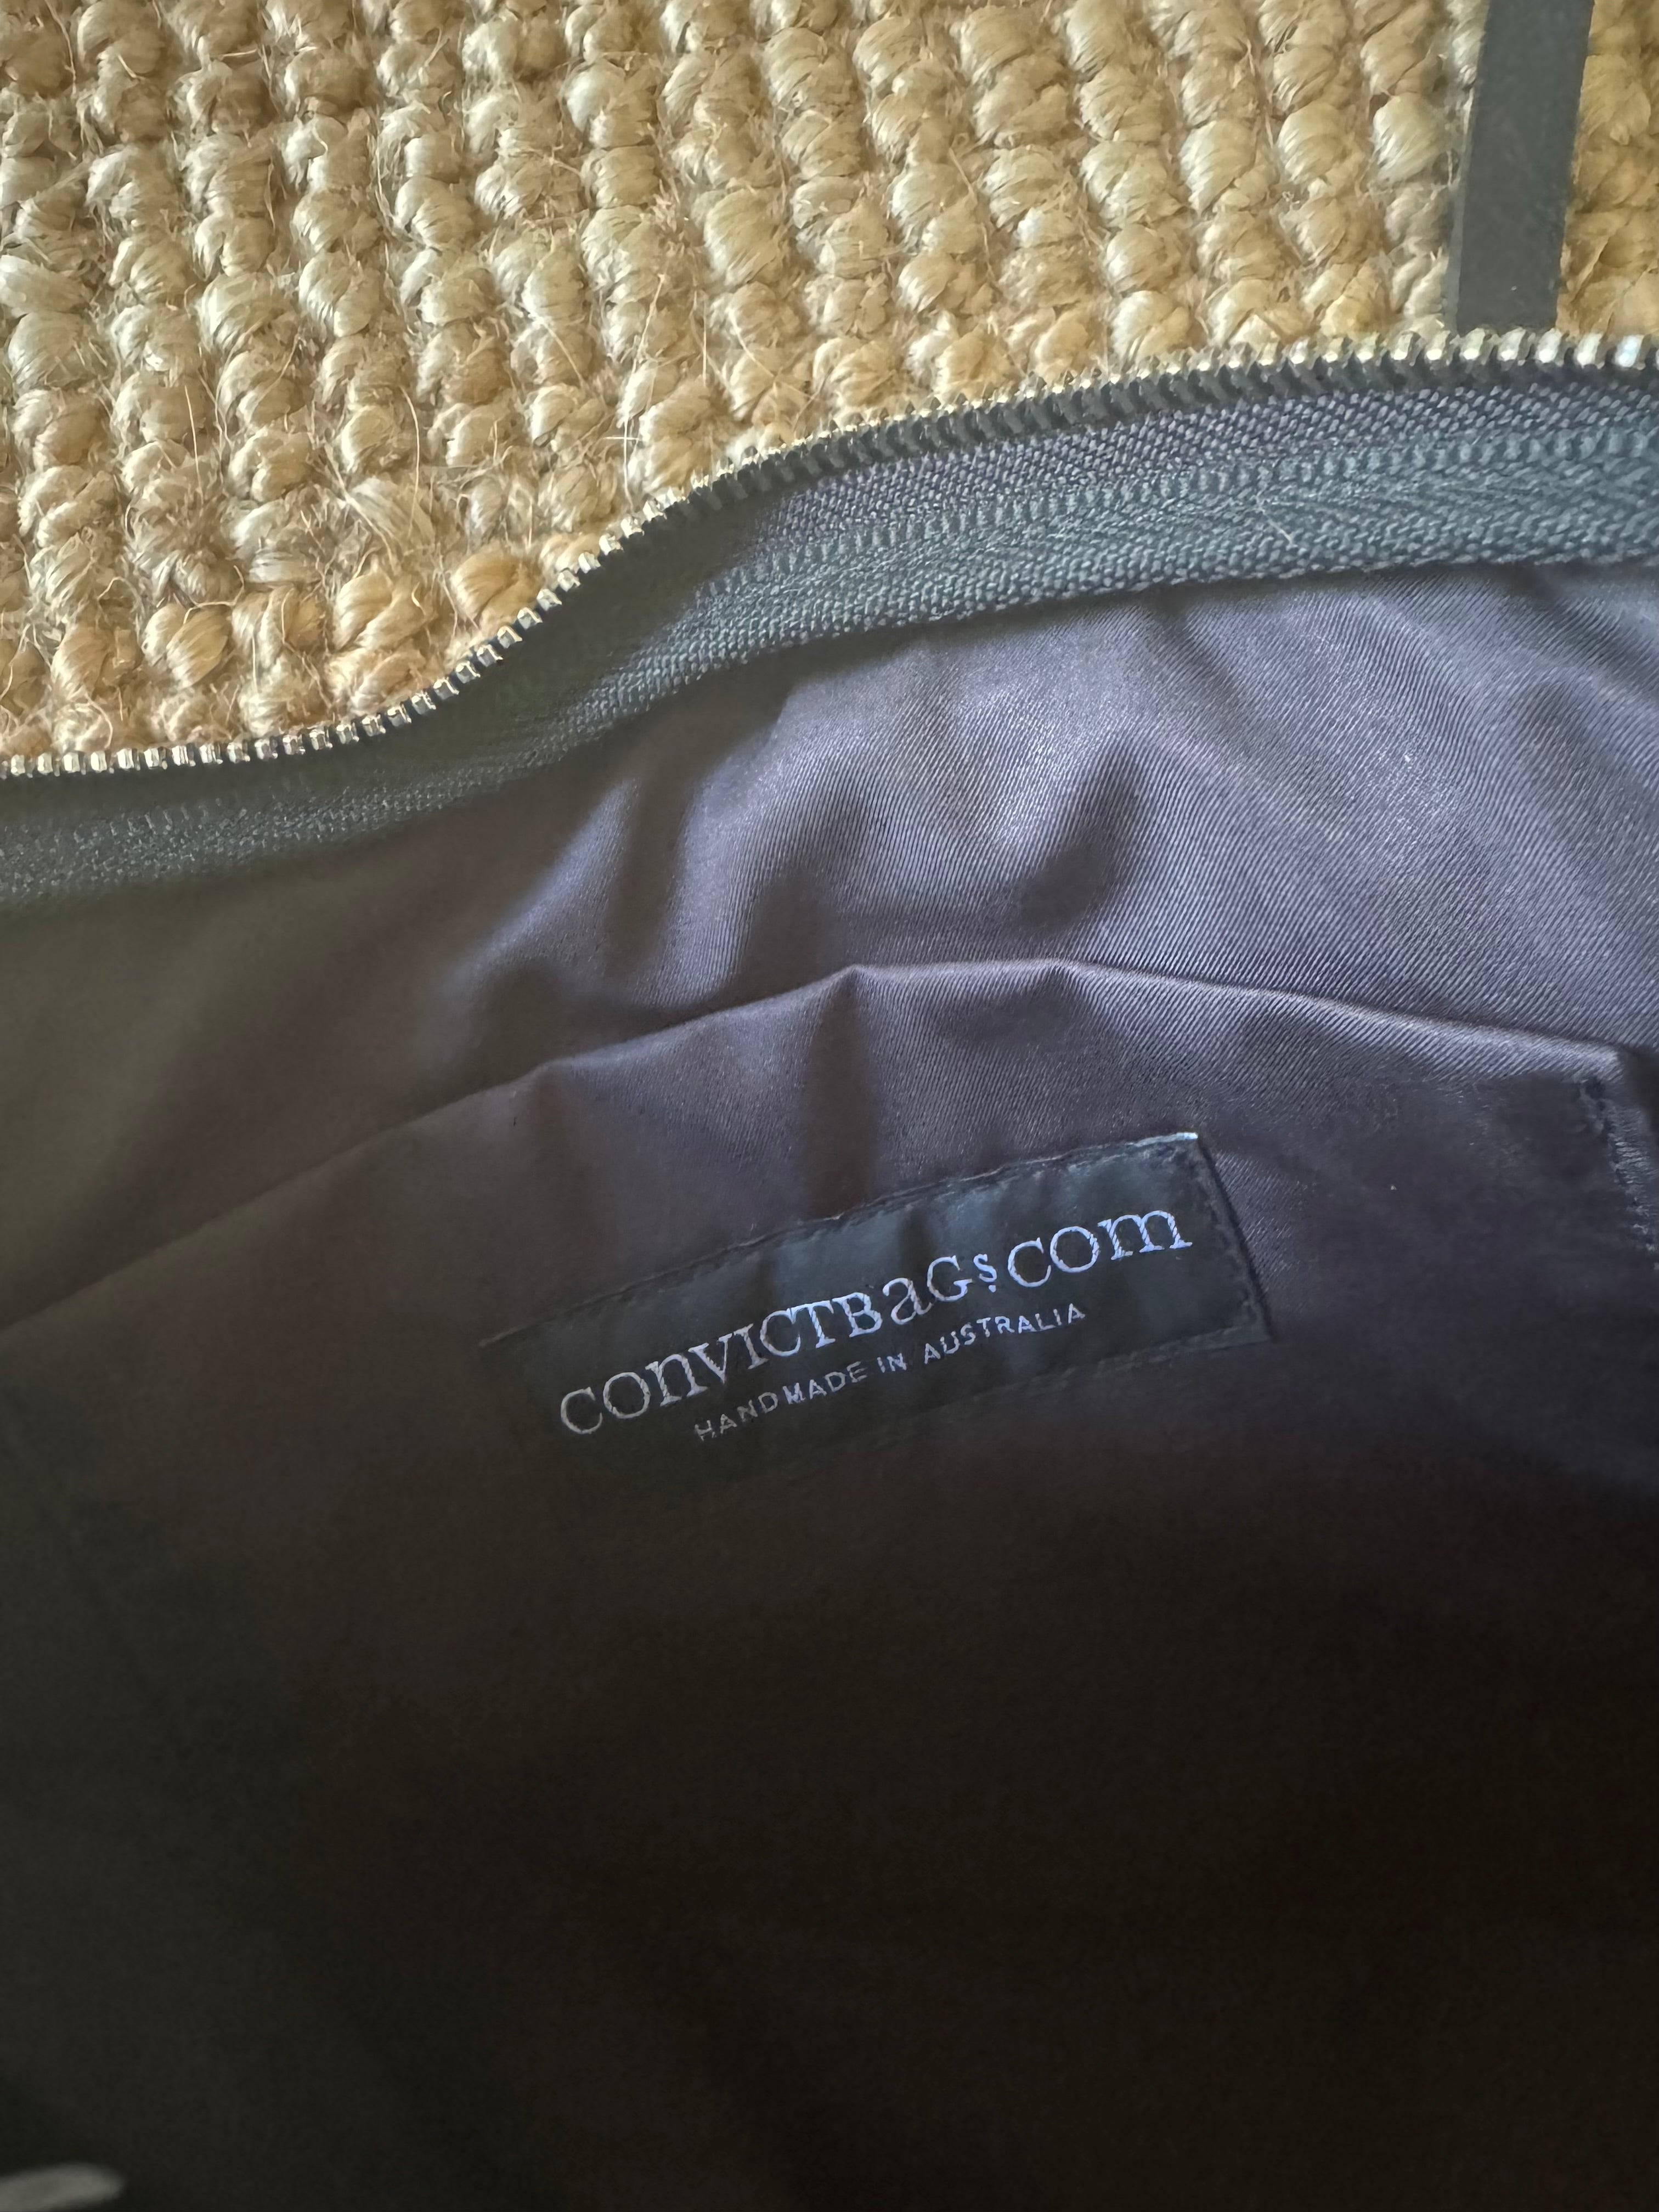 Pre-loved Convict Bags hide bag